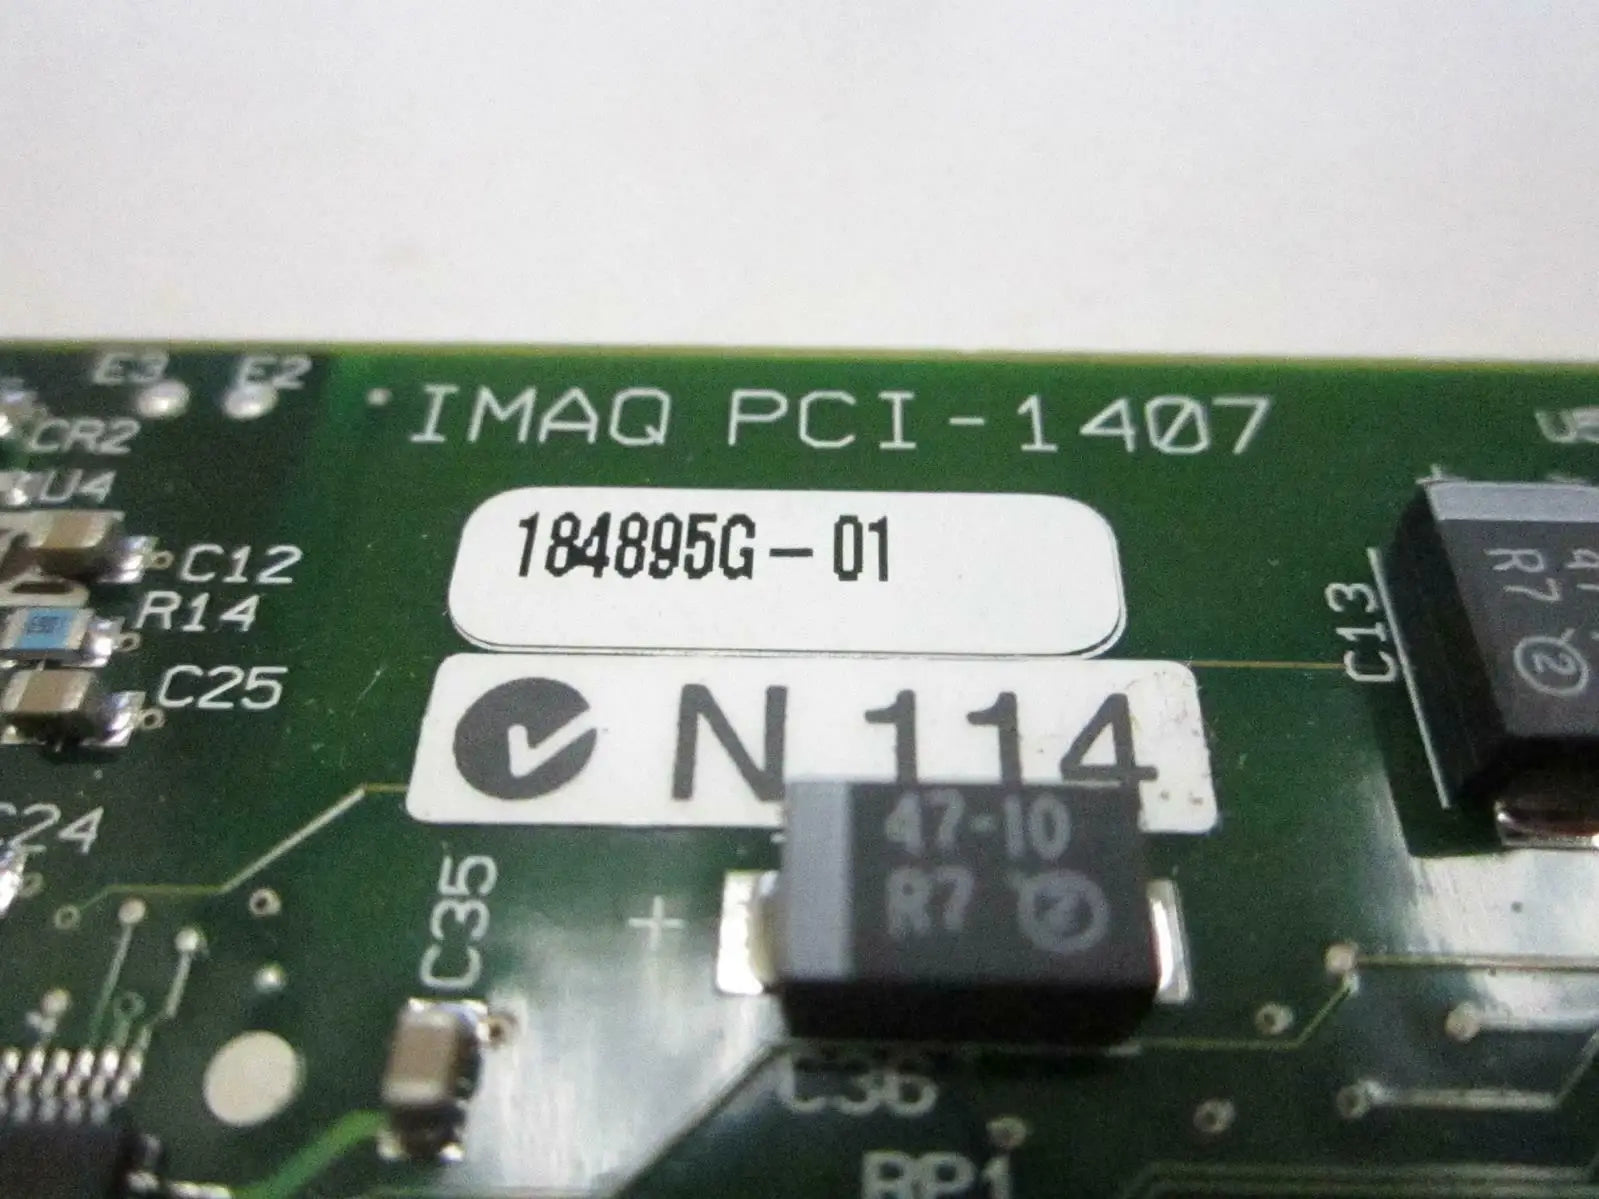 IMAQ PCI-1407 Image Acquisition Module